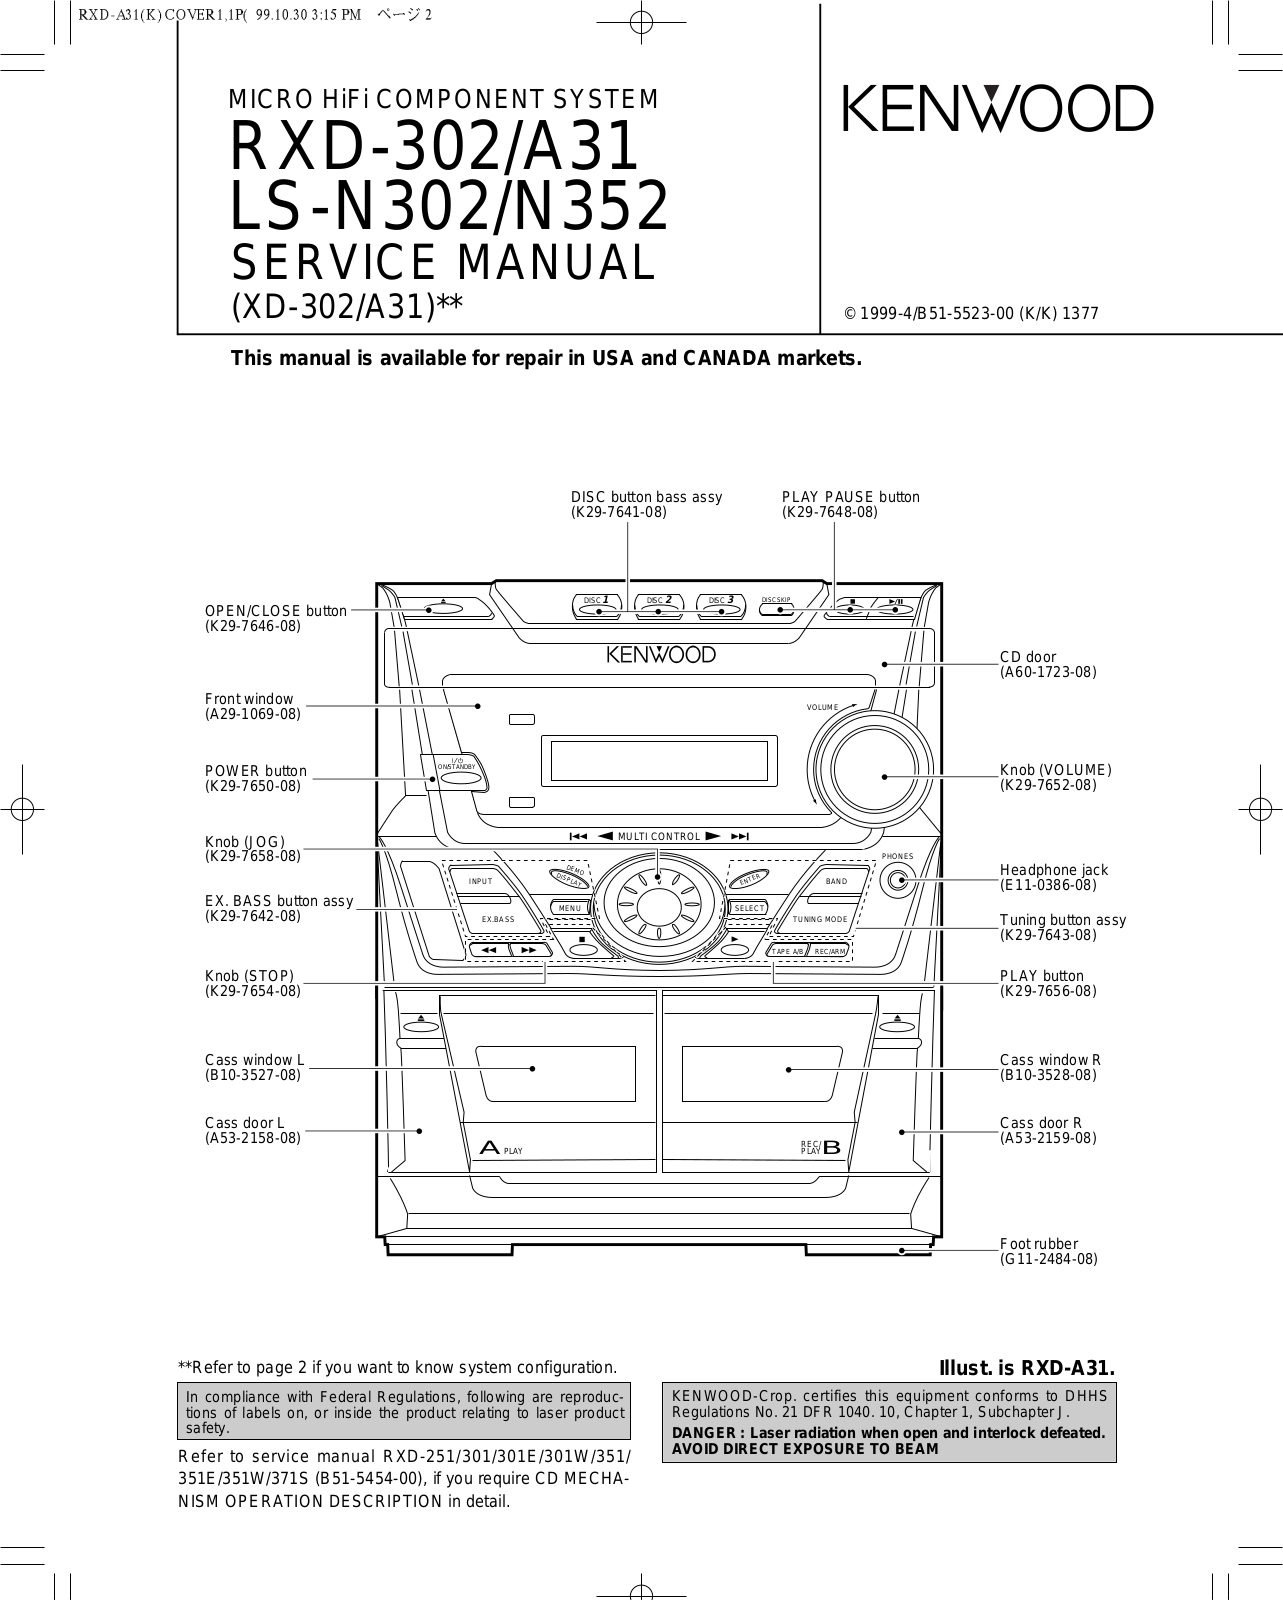 Kenwood RXD-302, RXD-A31, LS-N302, LS-N352 Service Manual